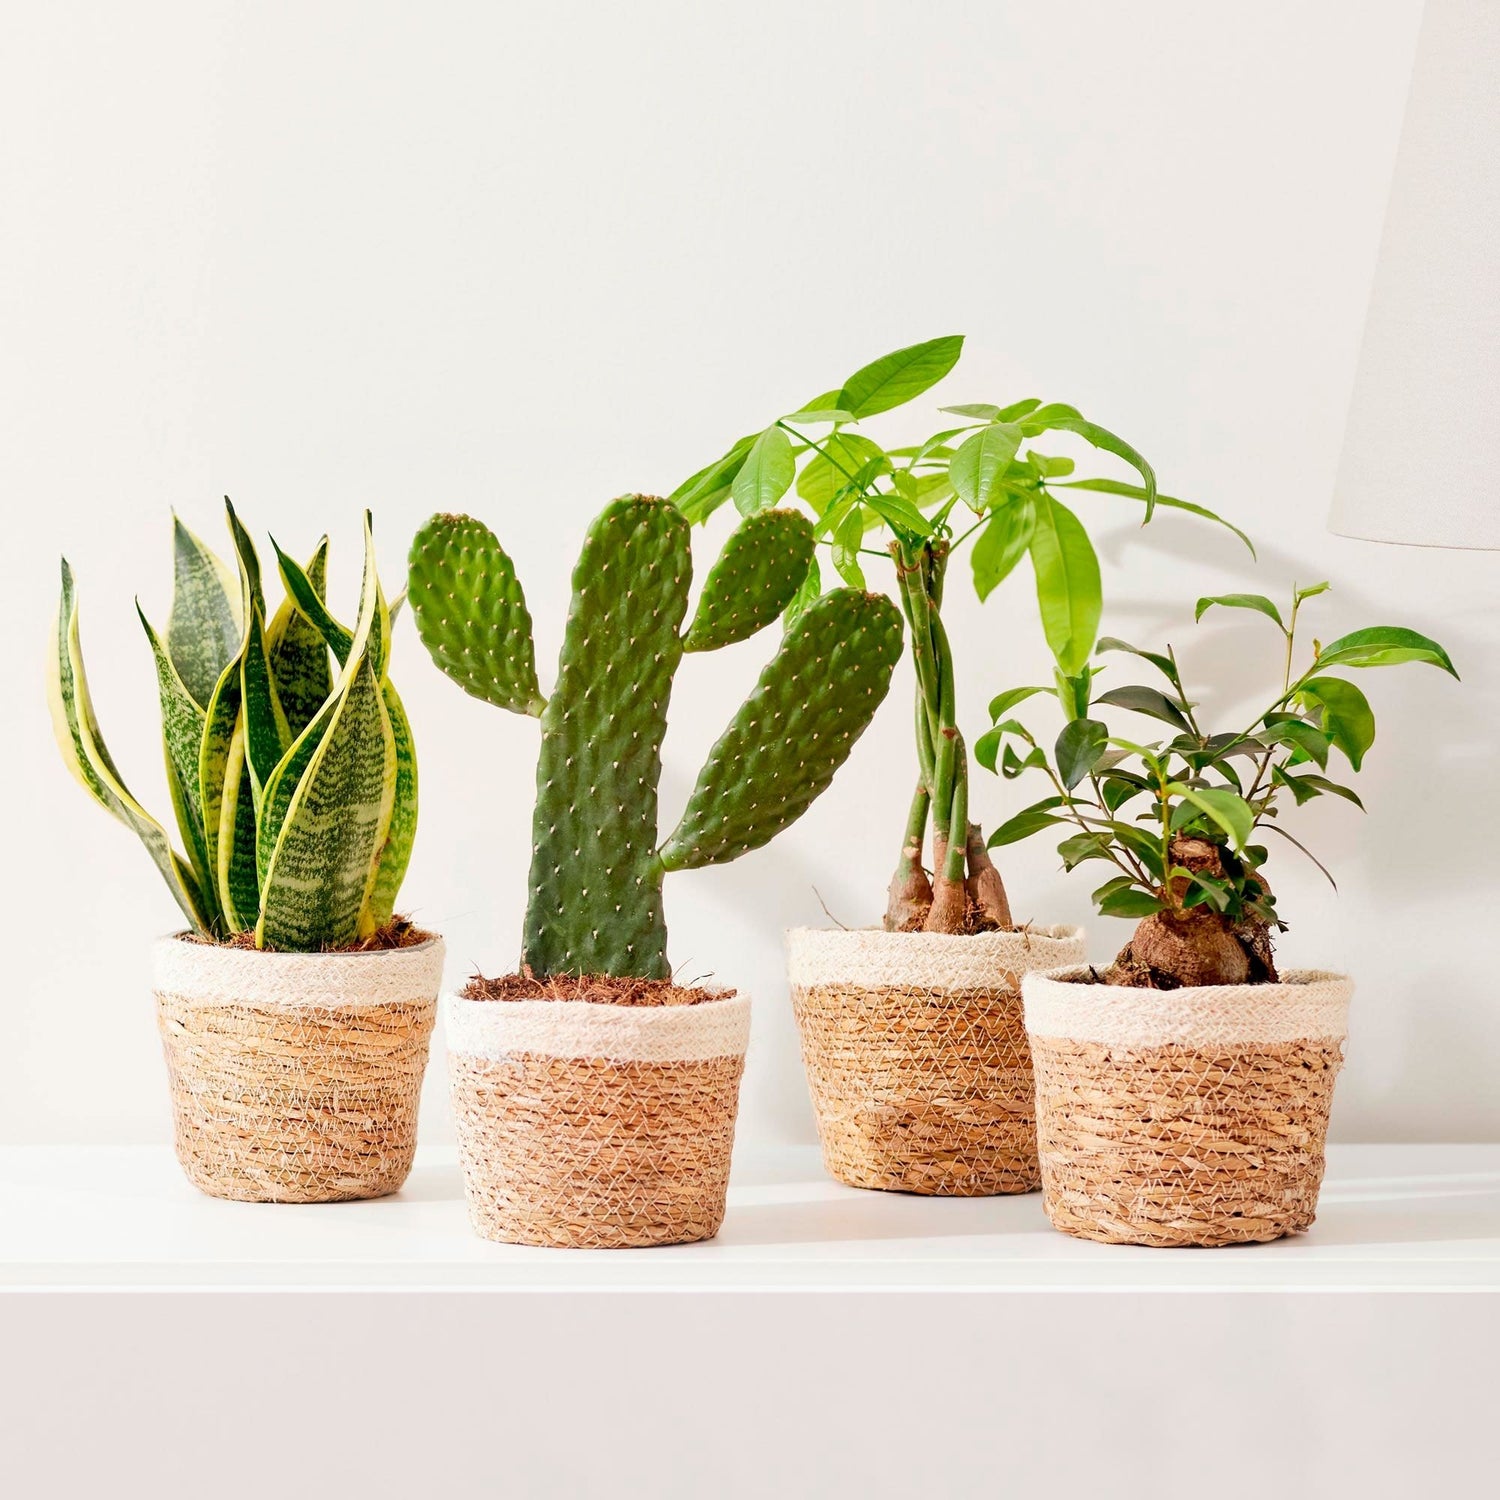 Plants in a pot